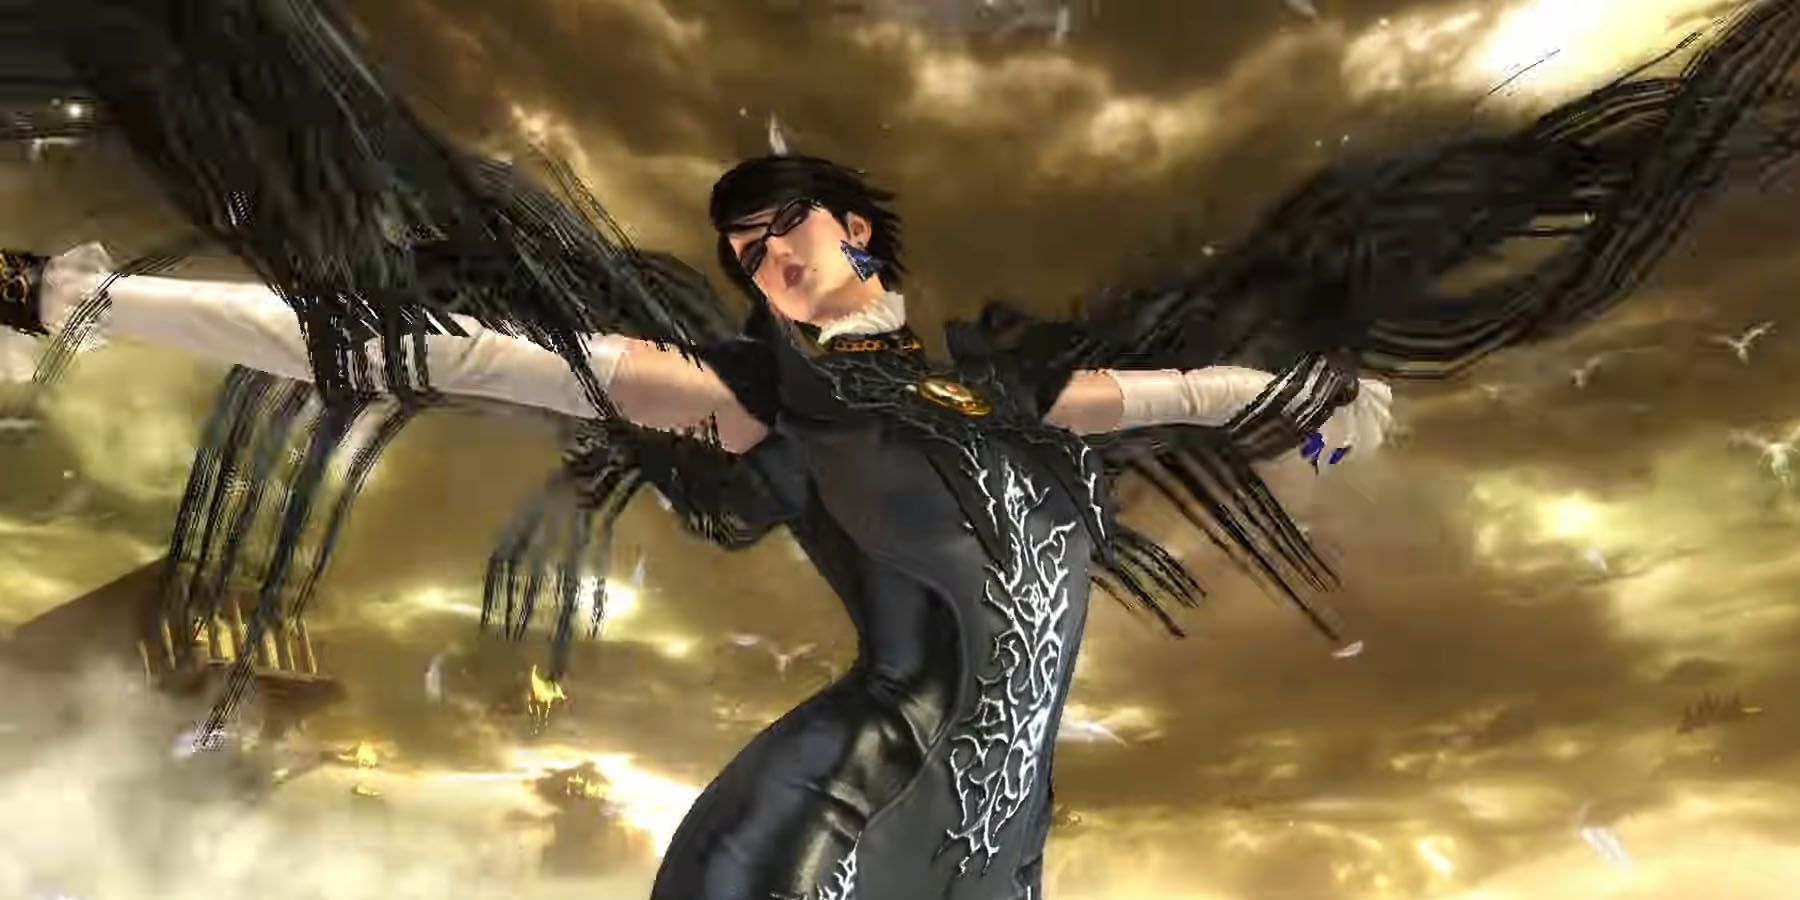 Bayonetta brandishing her wings with her hair